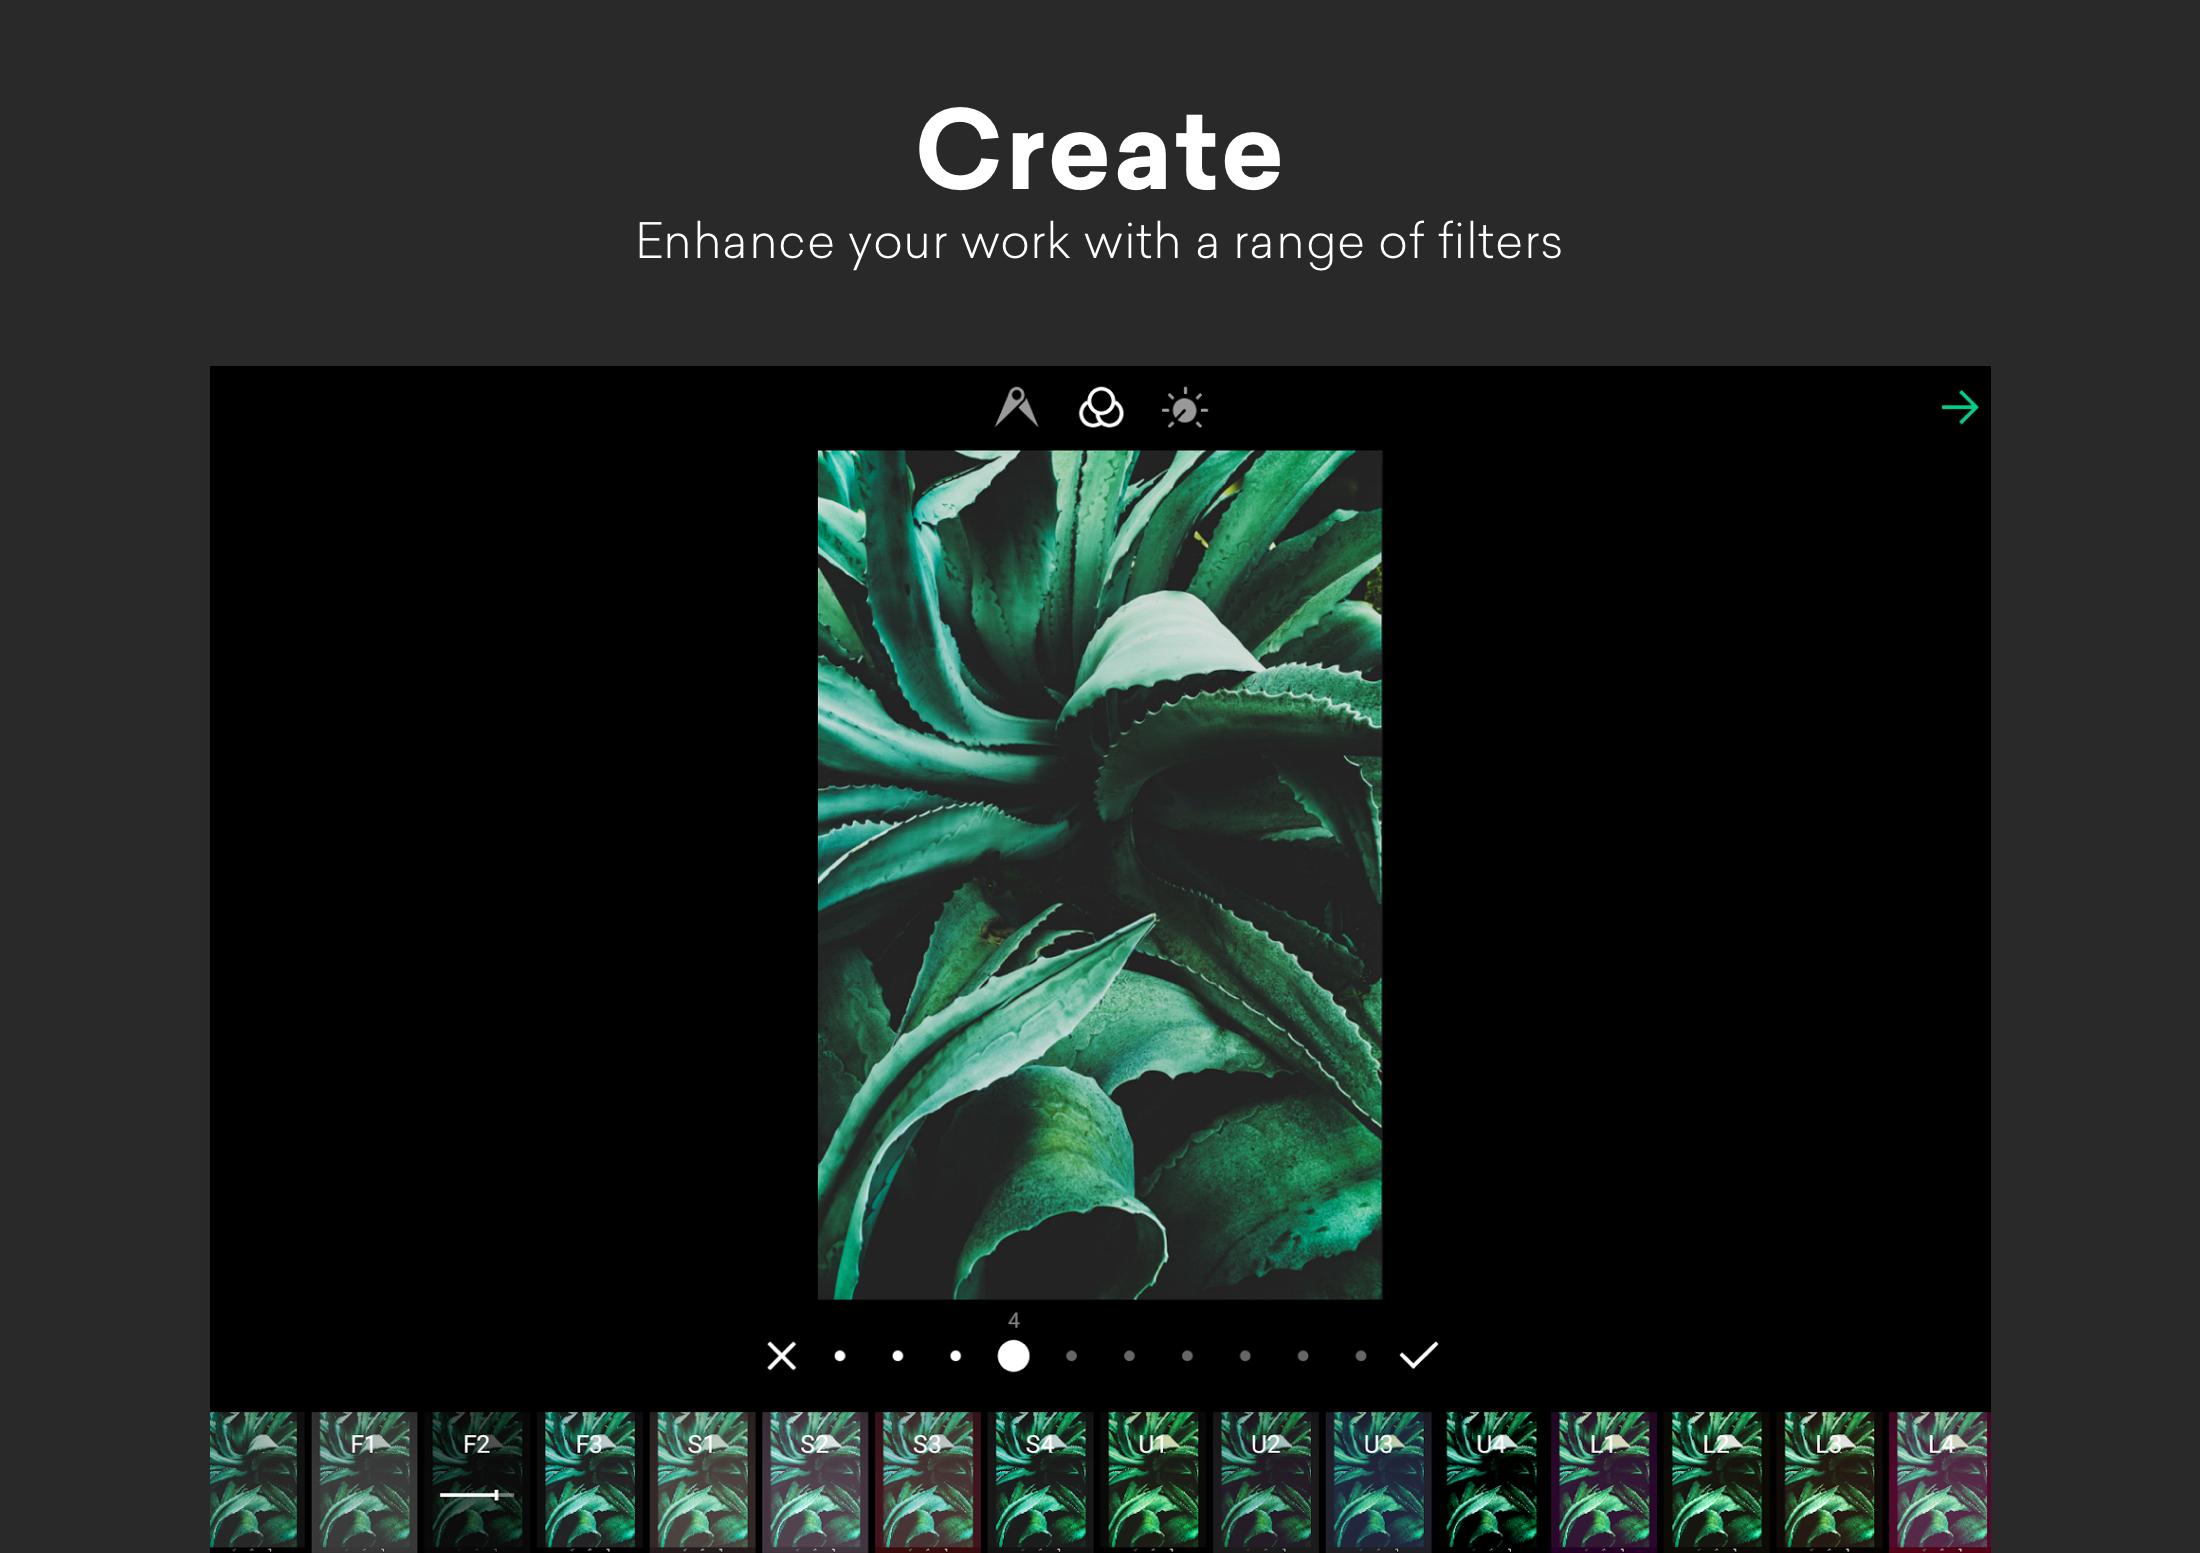 EyeEm Free Photo App For Sharing & Selling Images 8.1 Screenshot 9